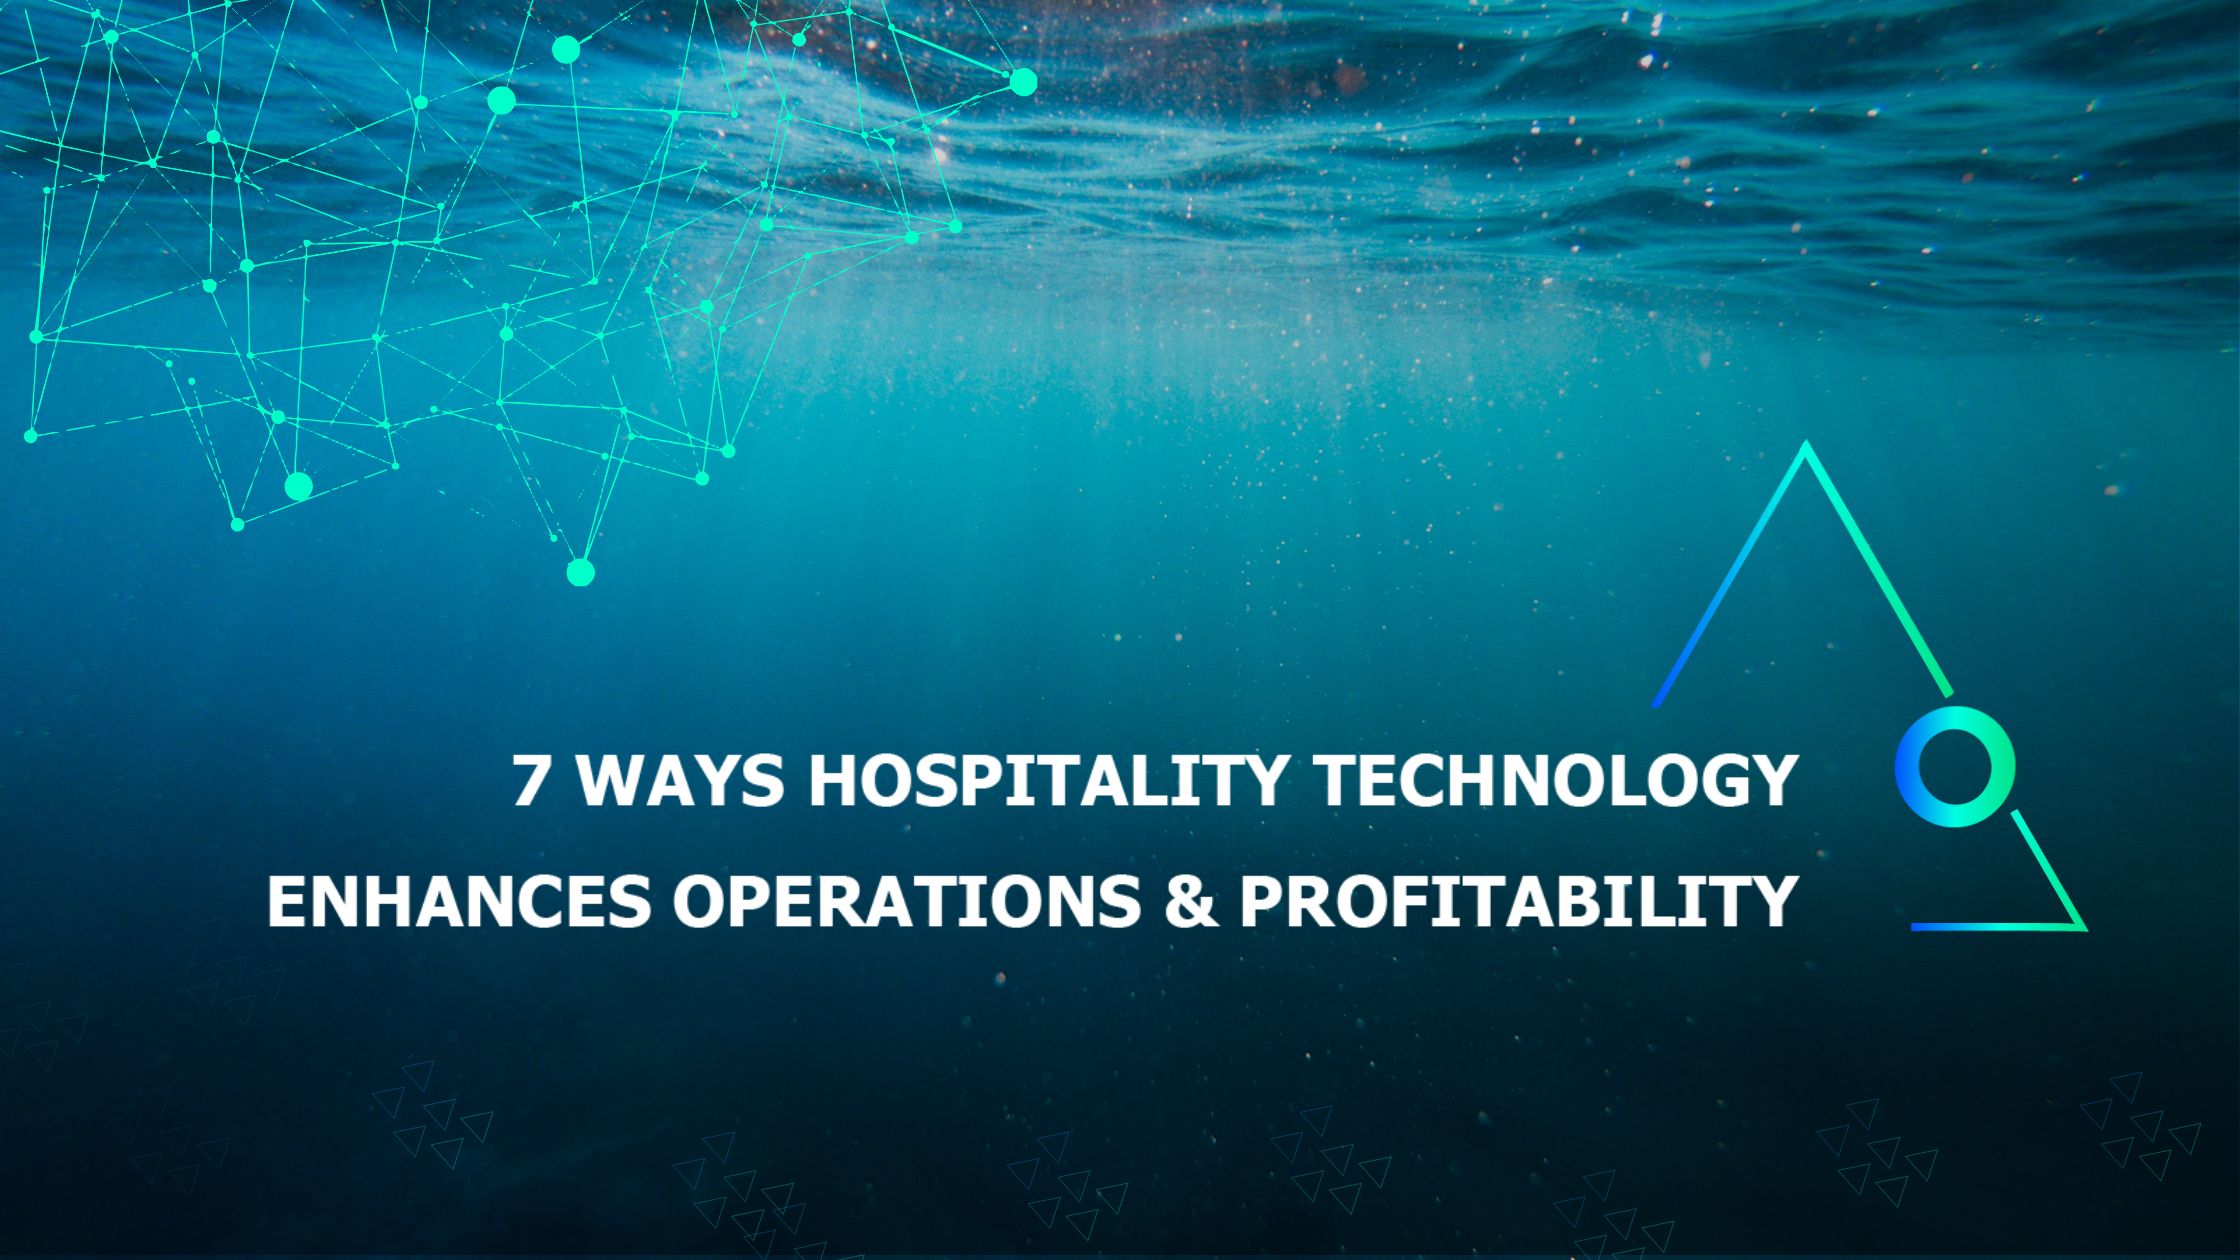 7 ways hospitality technology enhances operations & profitability